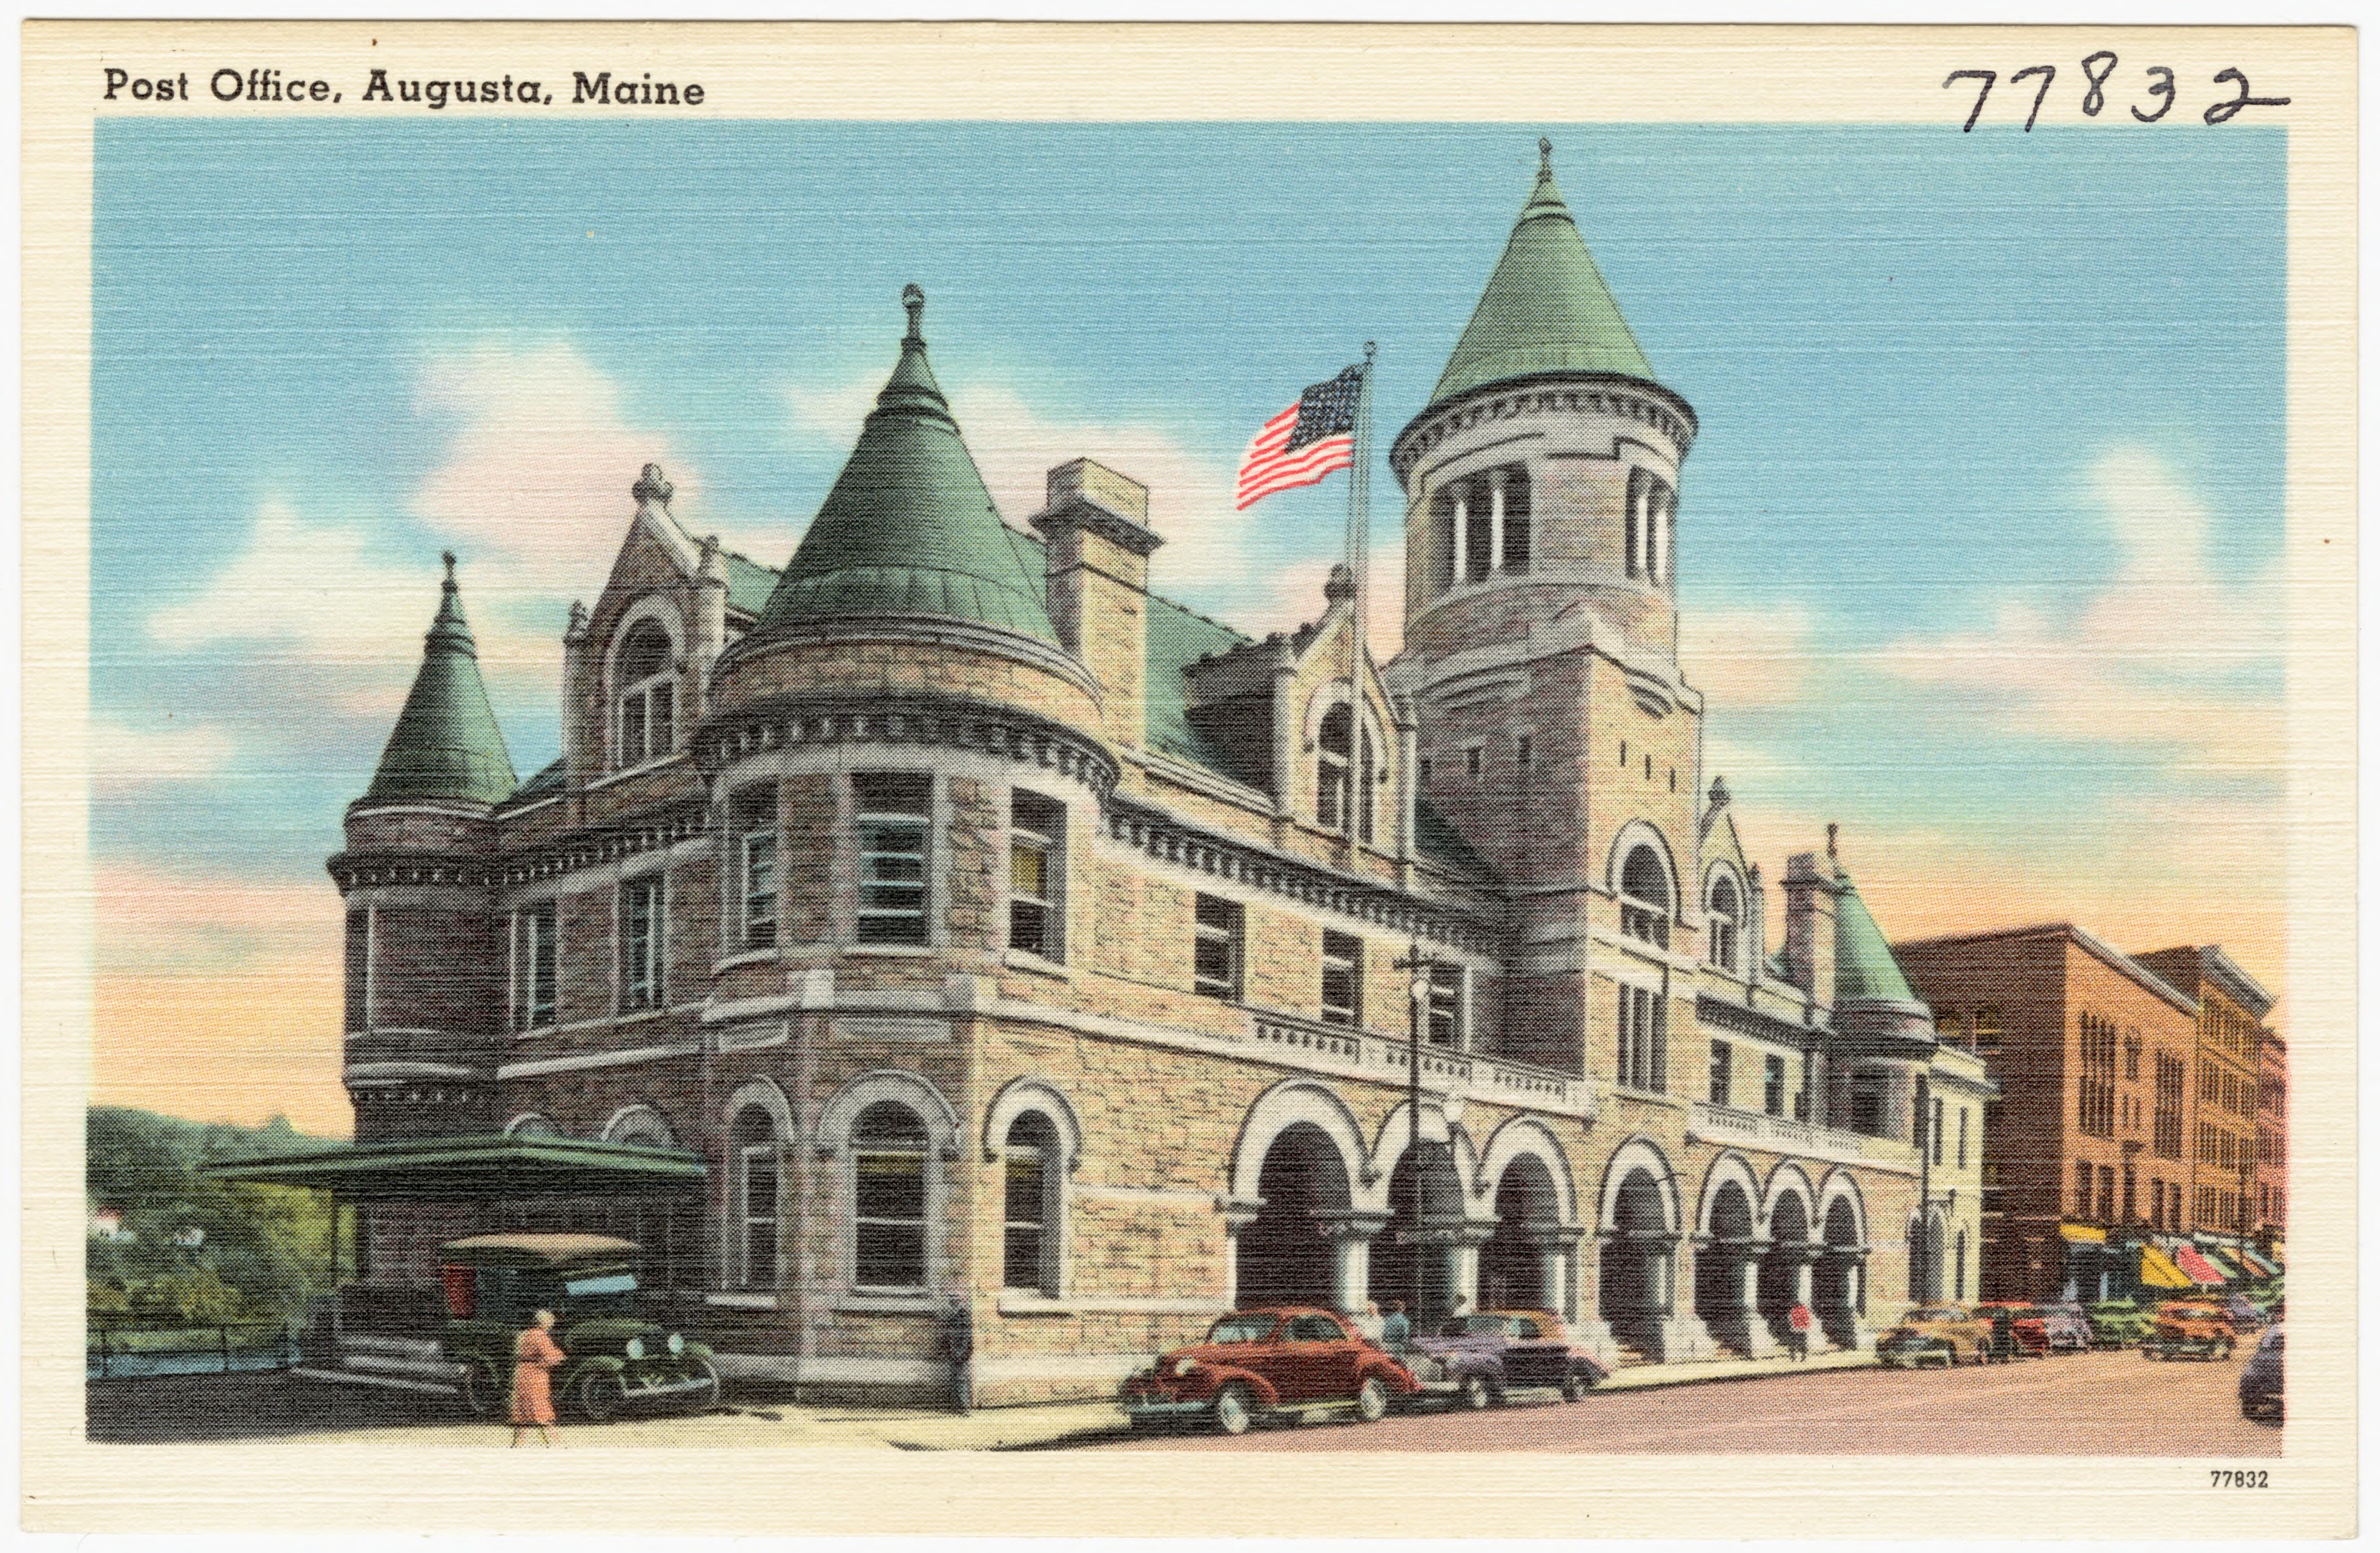 File:Post office, Augusta, Maine (77832).jpg - Wikimedia Commons